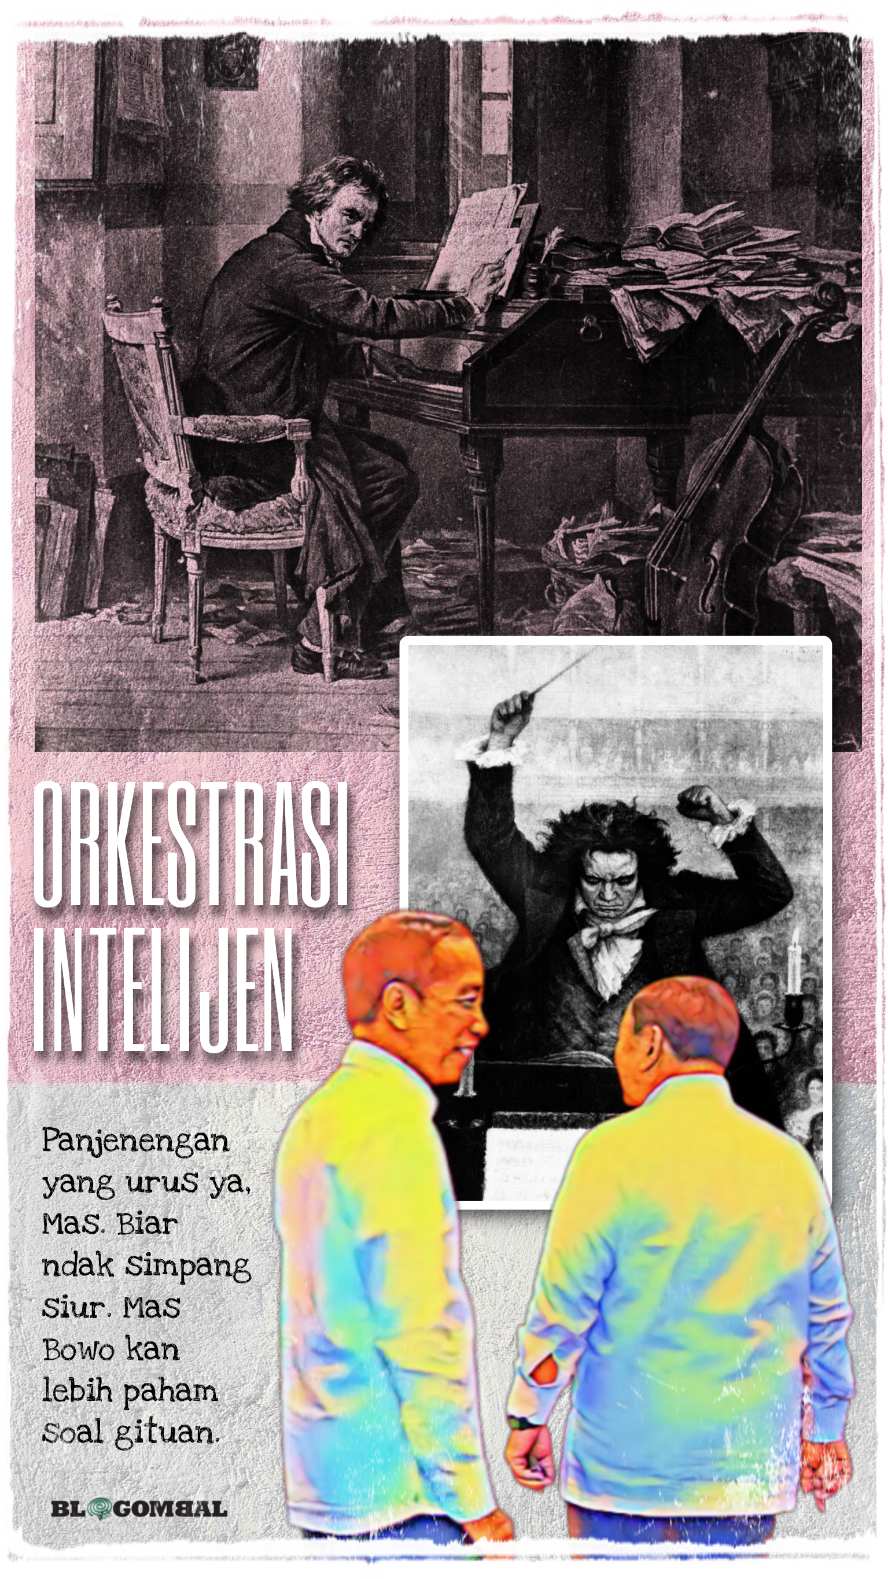 Orkestrasi intelijen, tugas dari Jokowi untuk Prabowo 